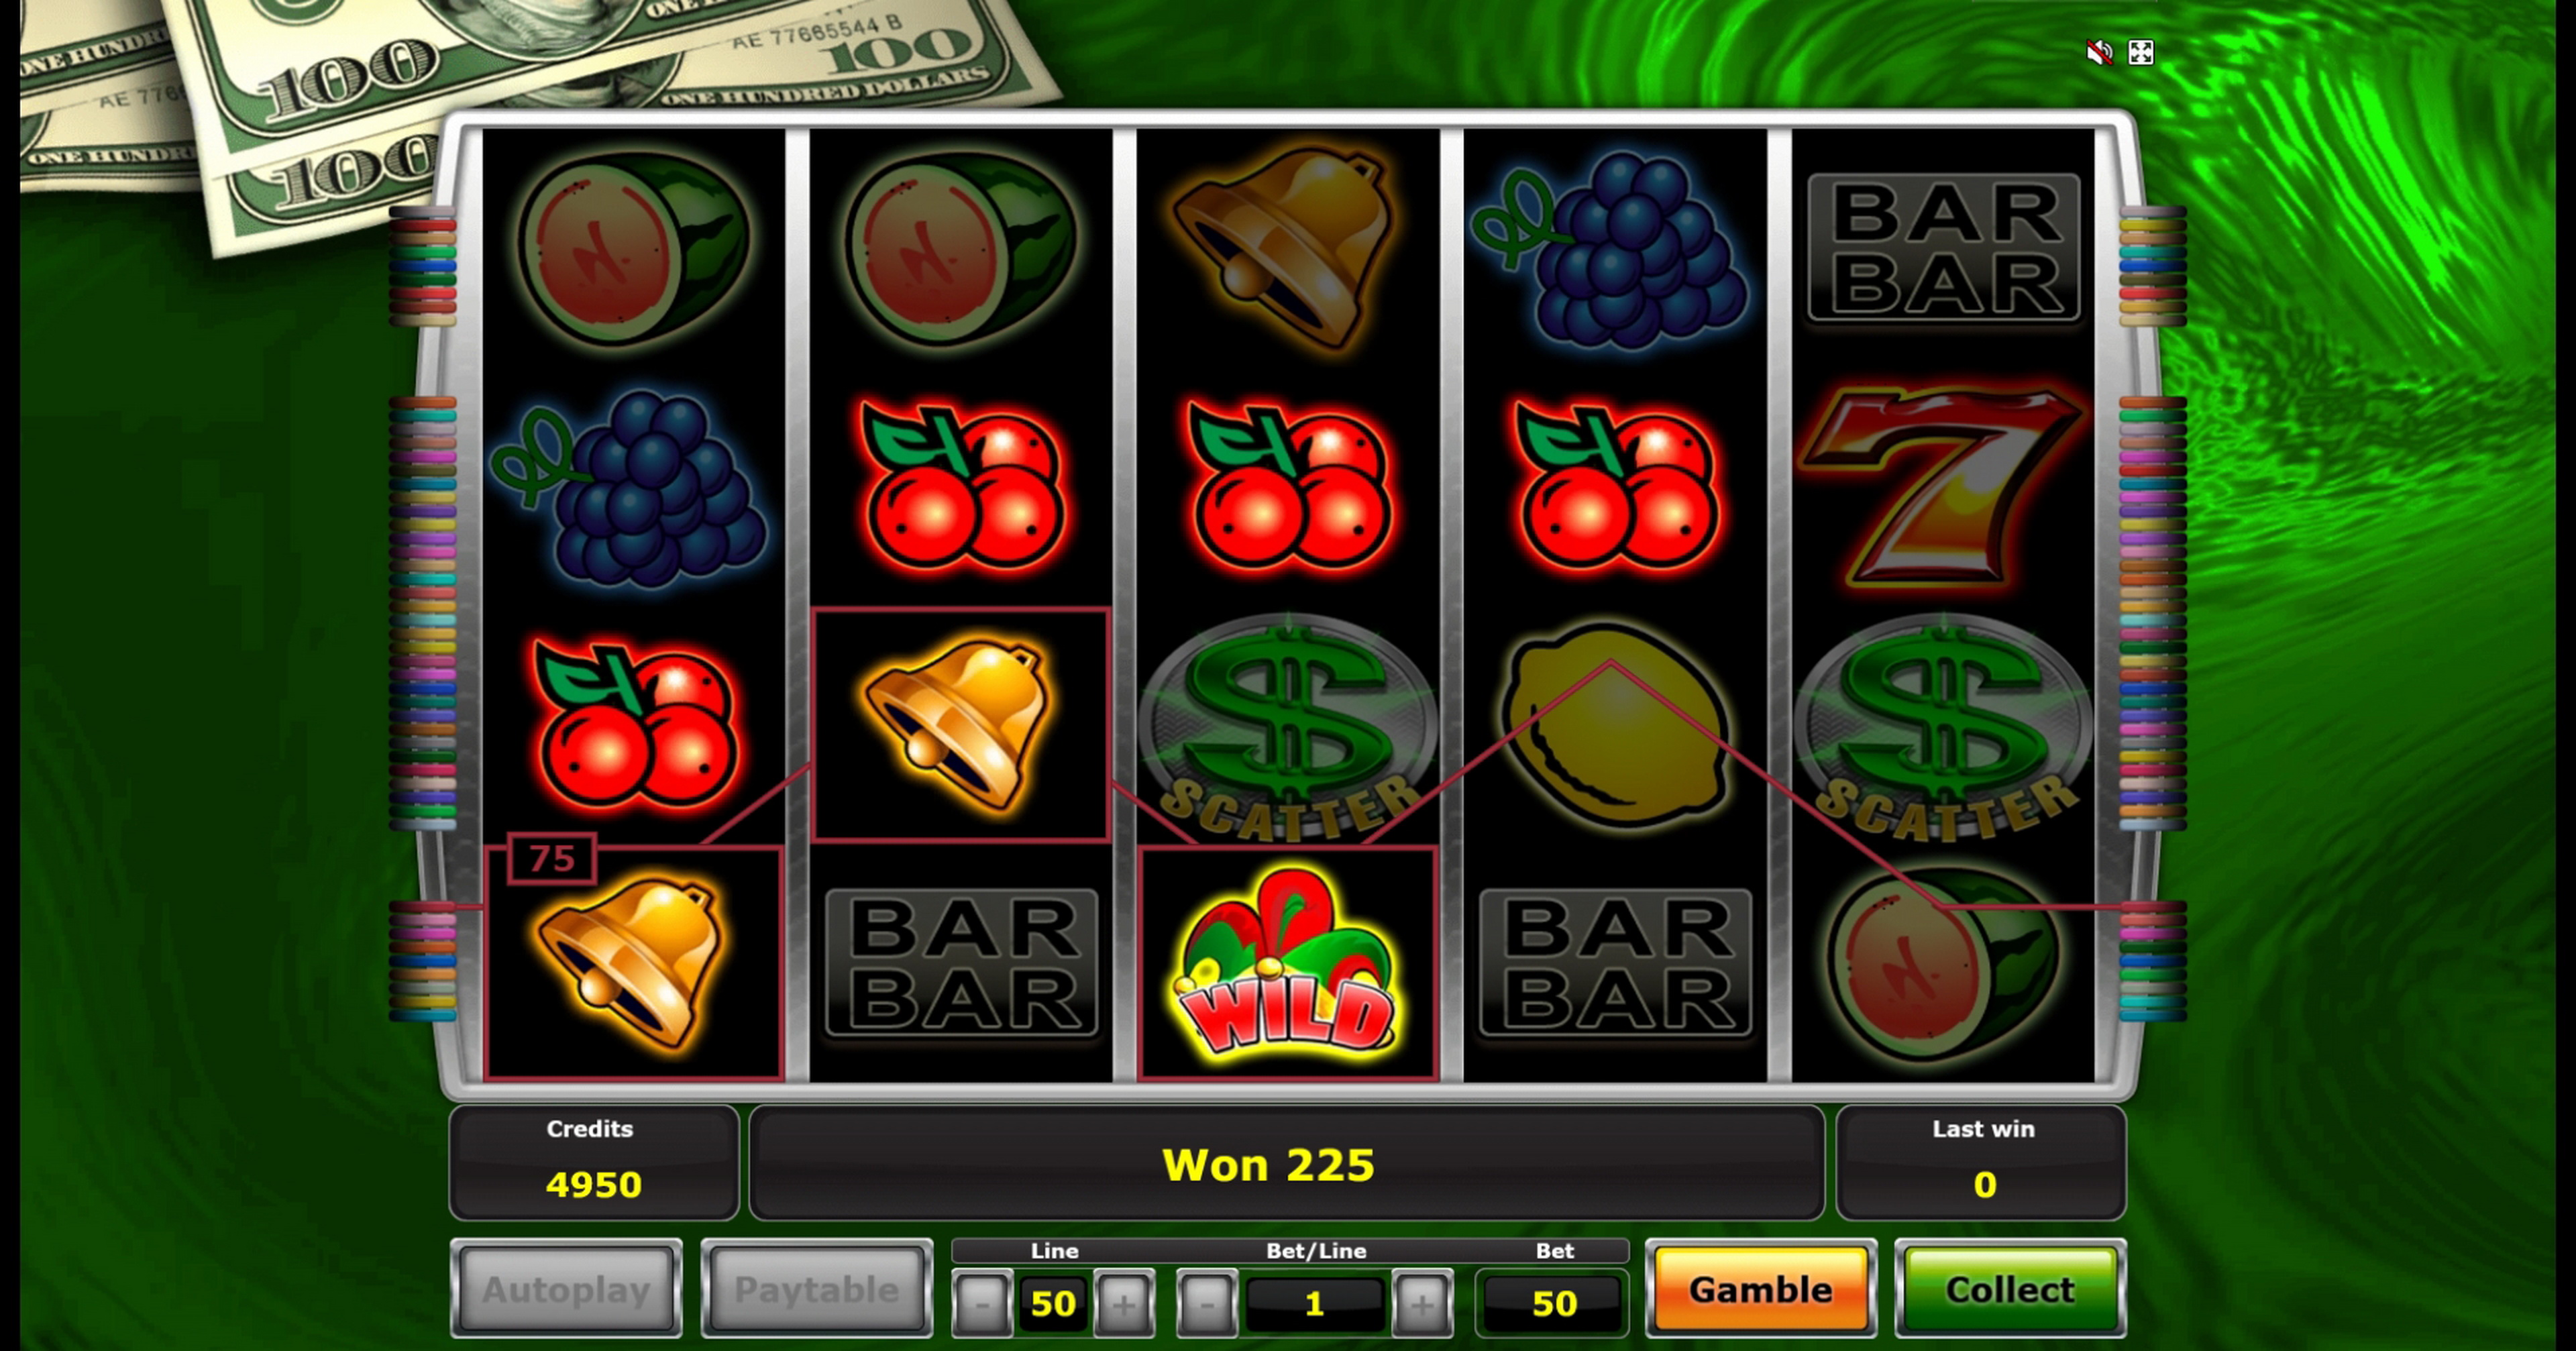 Win Money in Cash Runner Free Slot Game by Greentube